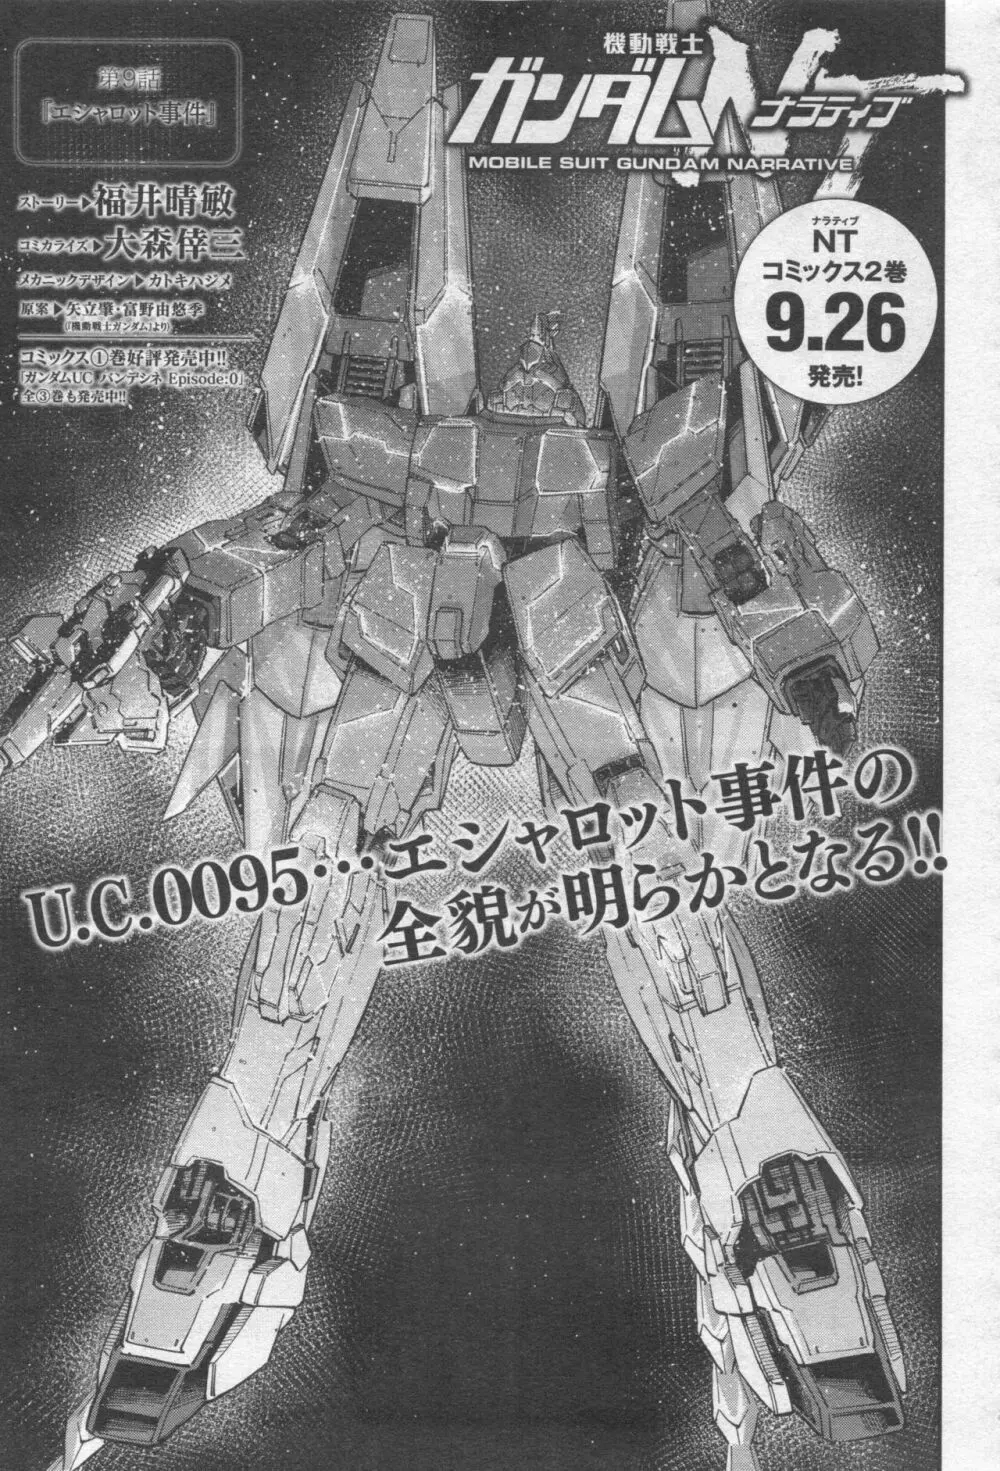 Gundam Ace – October 2019 240ページ